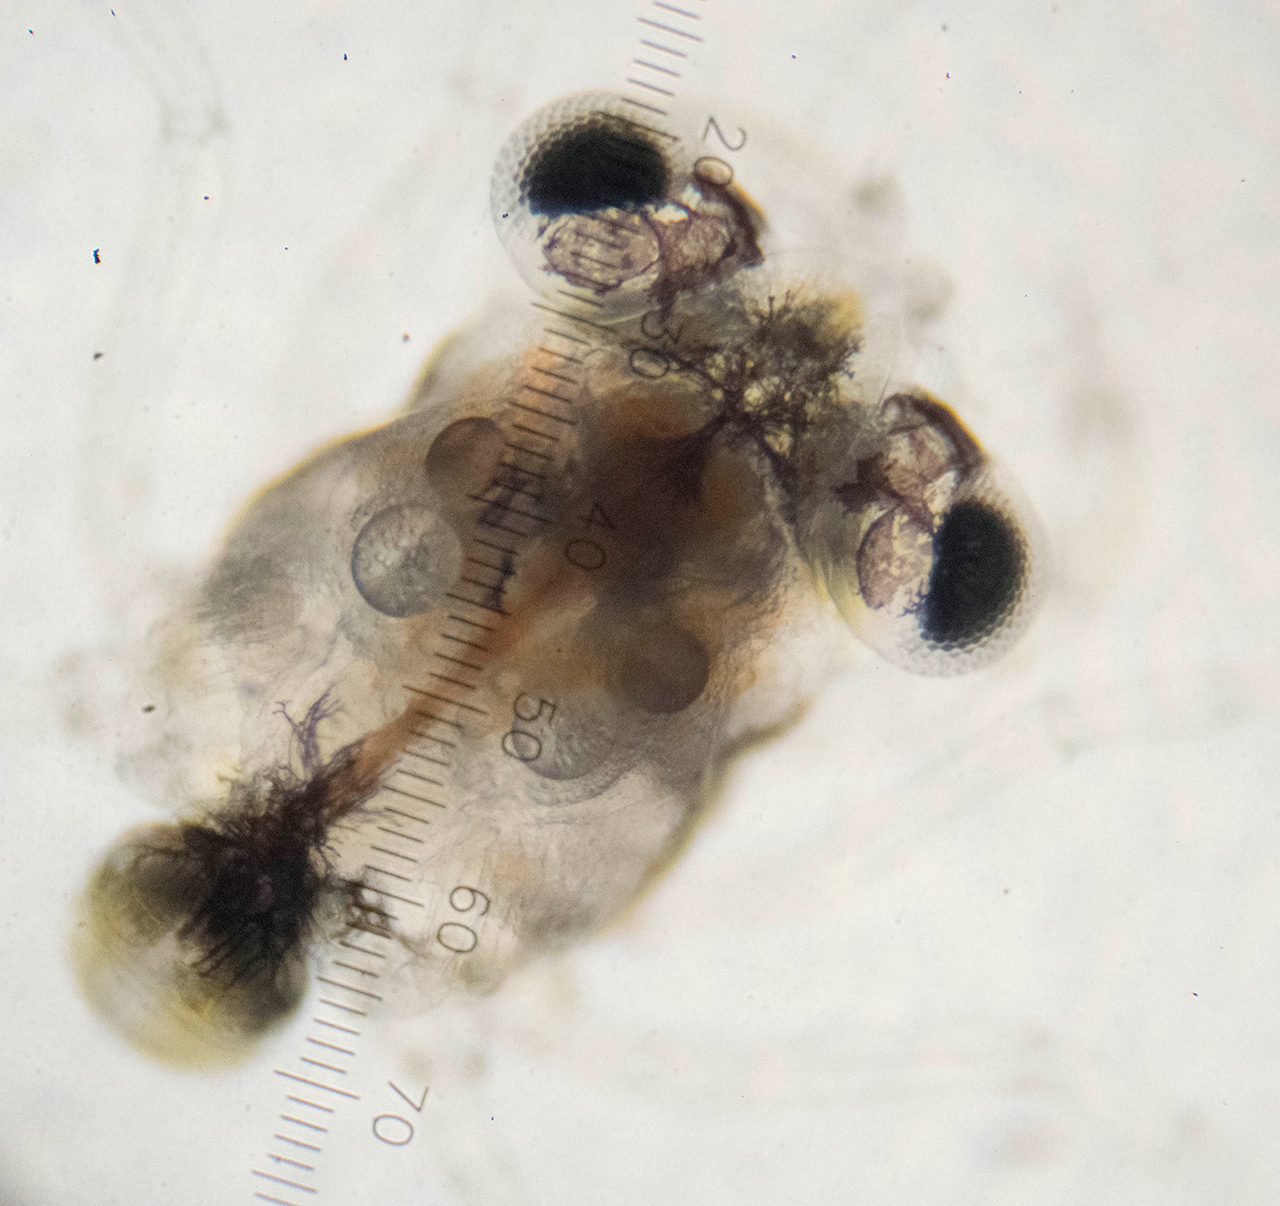 Fiddler crab larva under a microscope